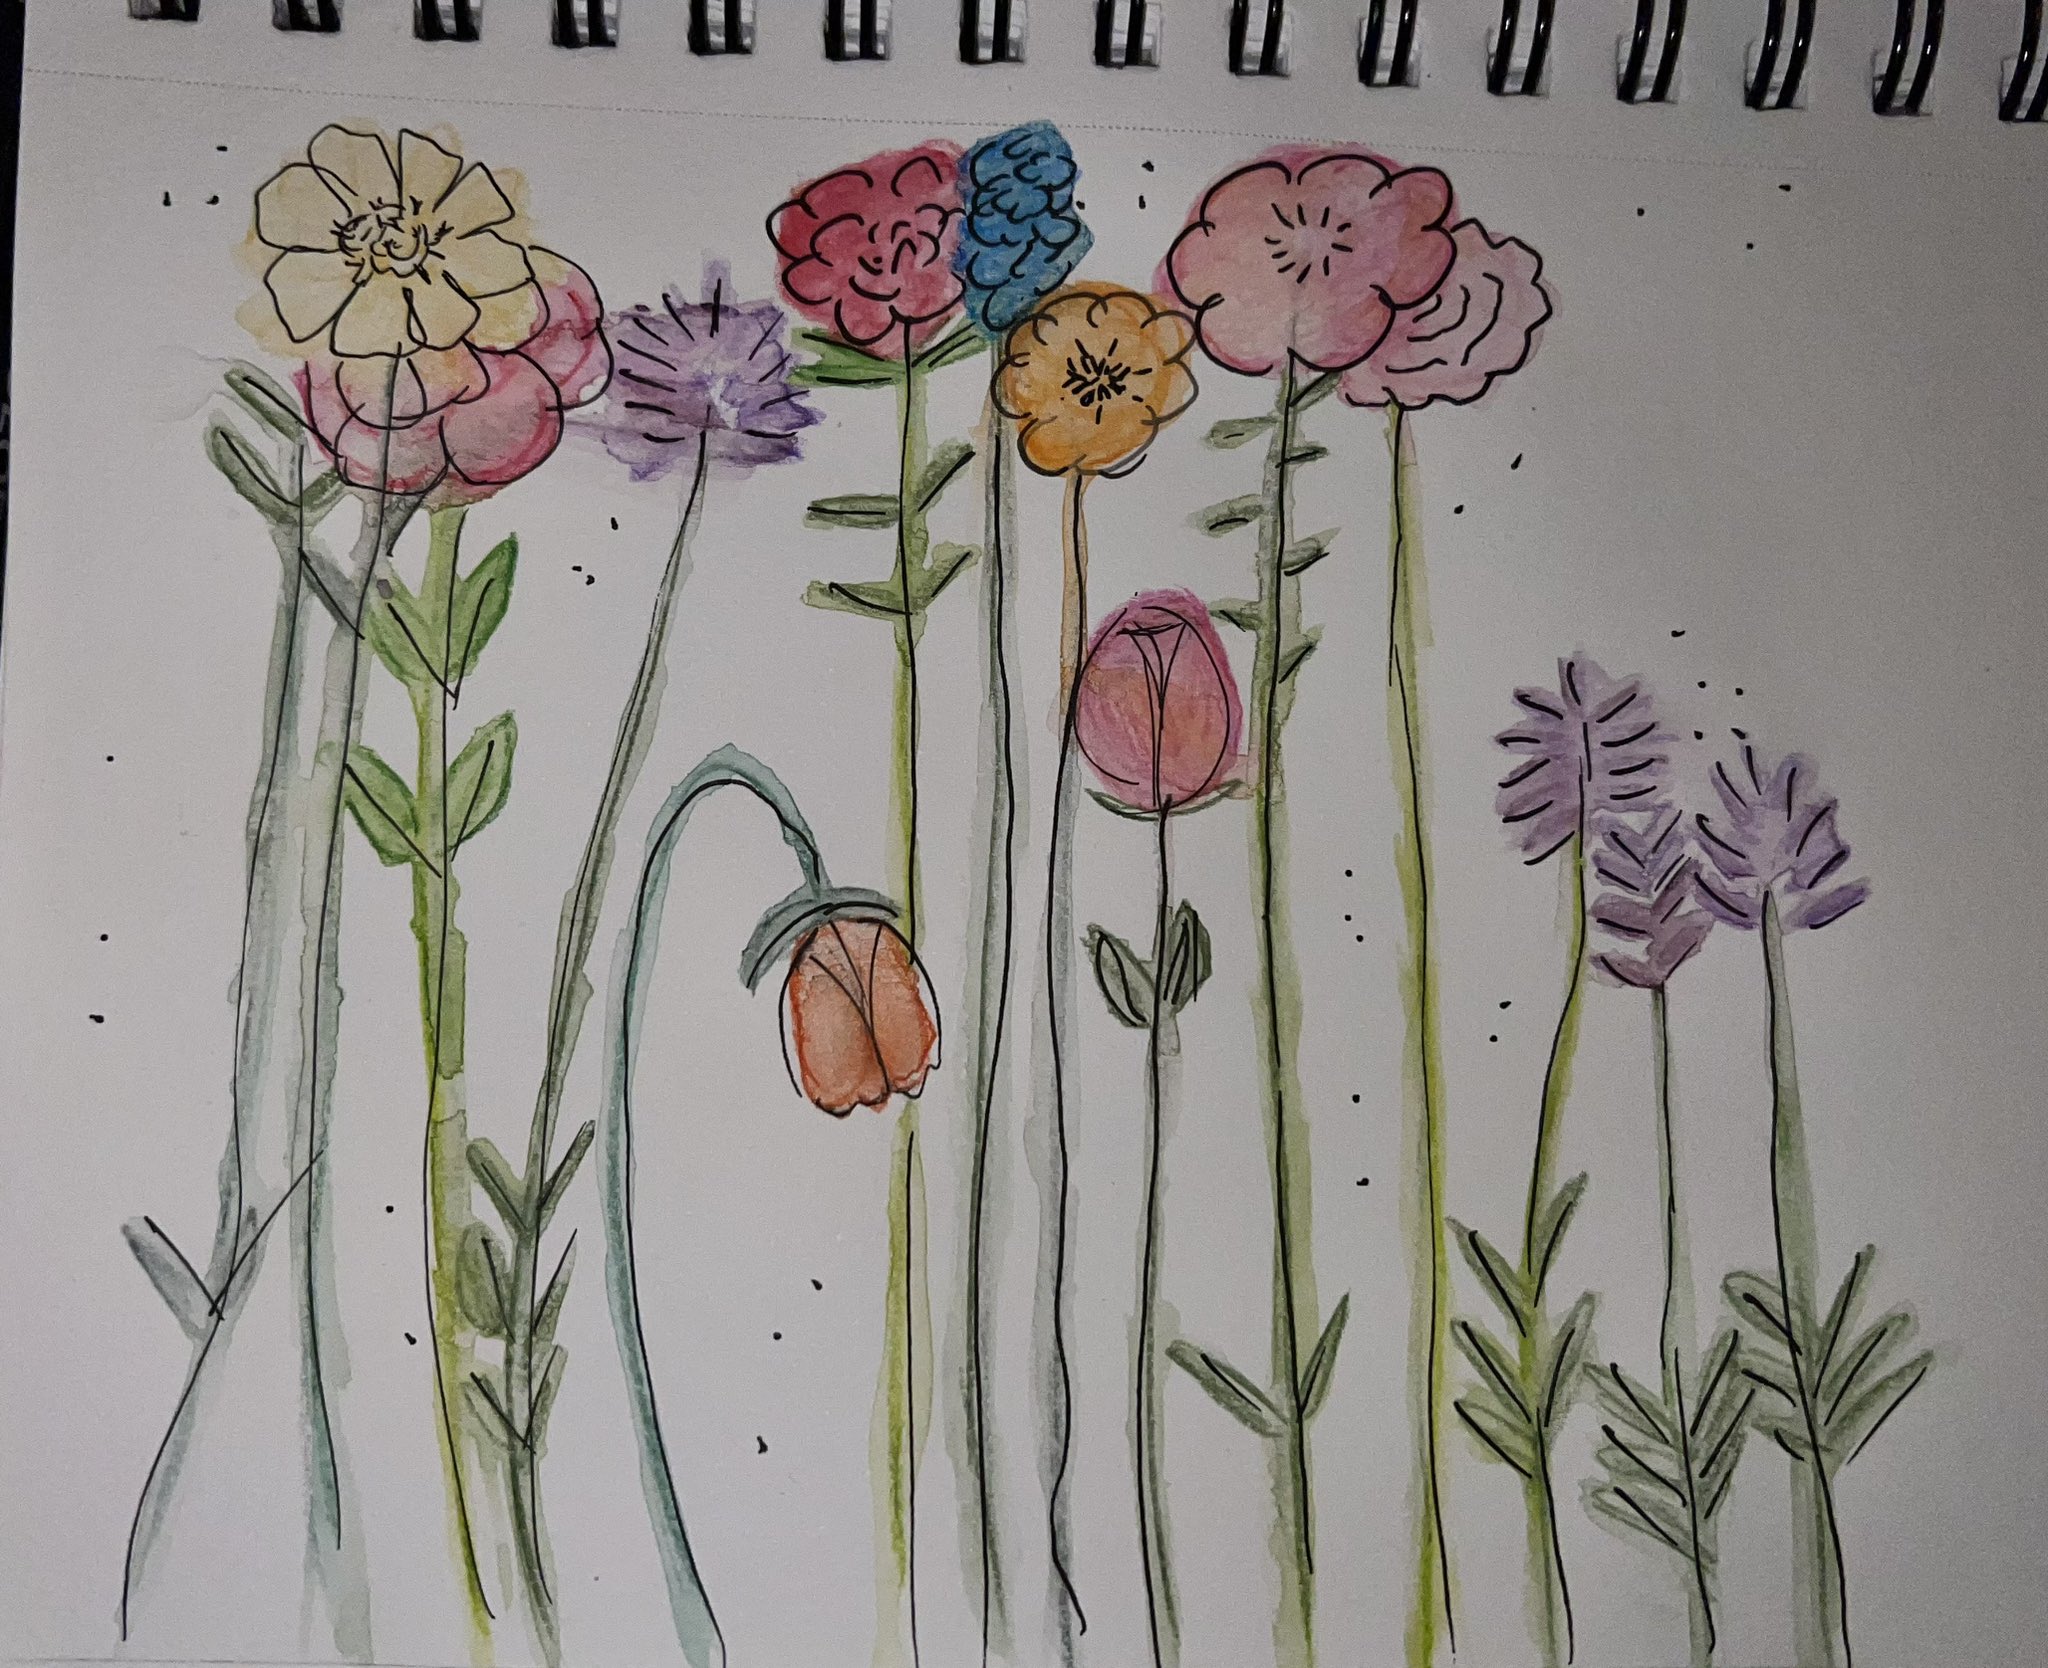 Girl Is Watering Garden Bed with Vegetables. | Art drawings for kids, Garden  drawing, Drawing for kids